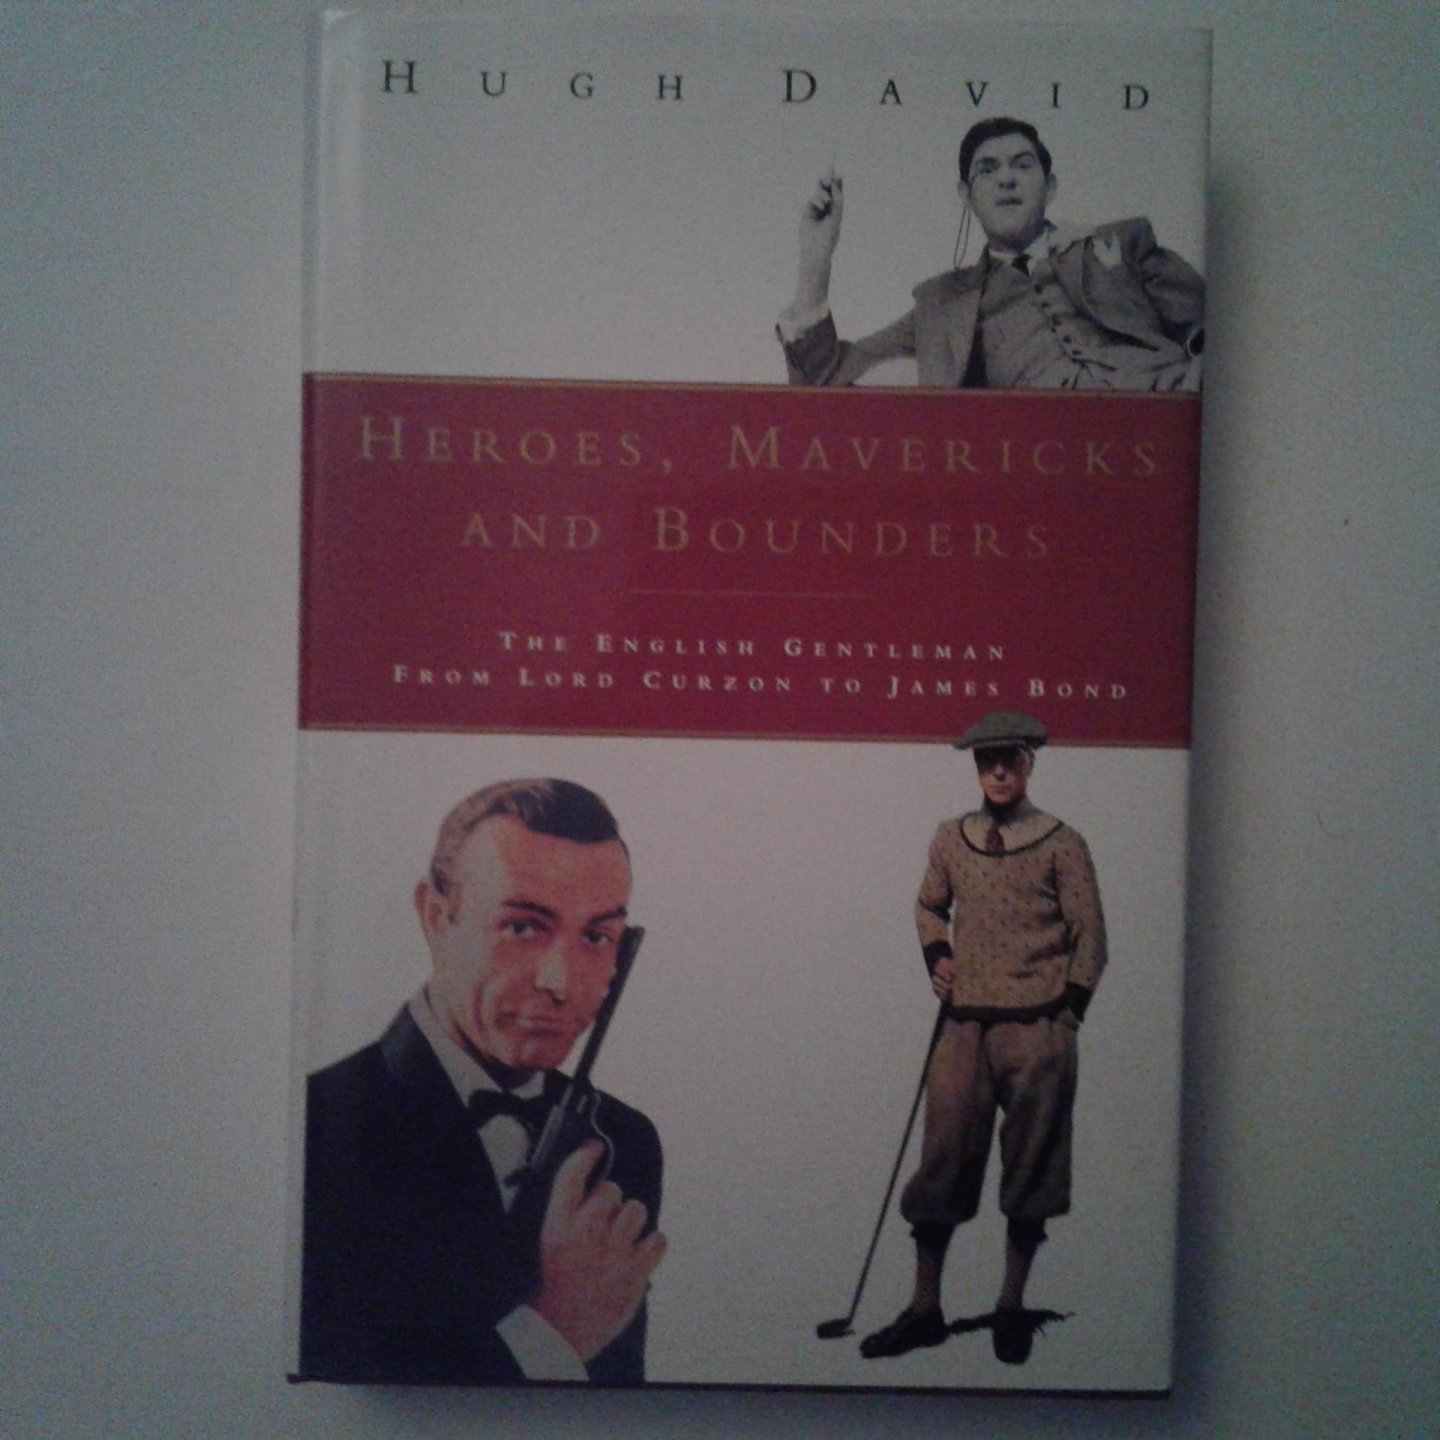 David, Hugh - Heroes, Mavericks and Bounders ; The English Gentleman from Lord Curzon to James Bond